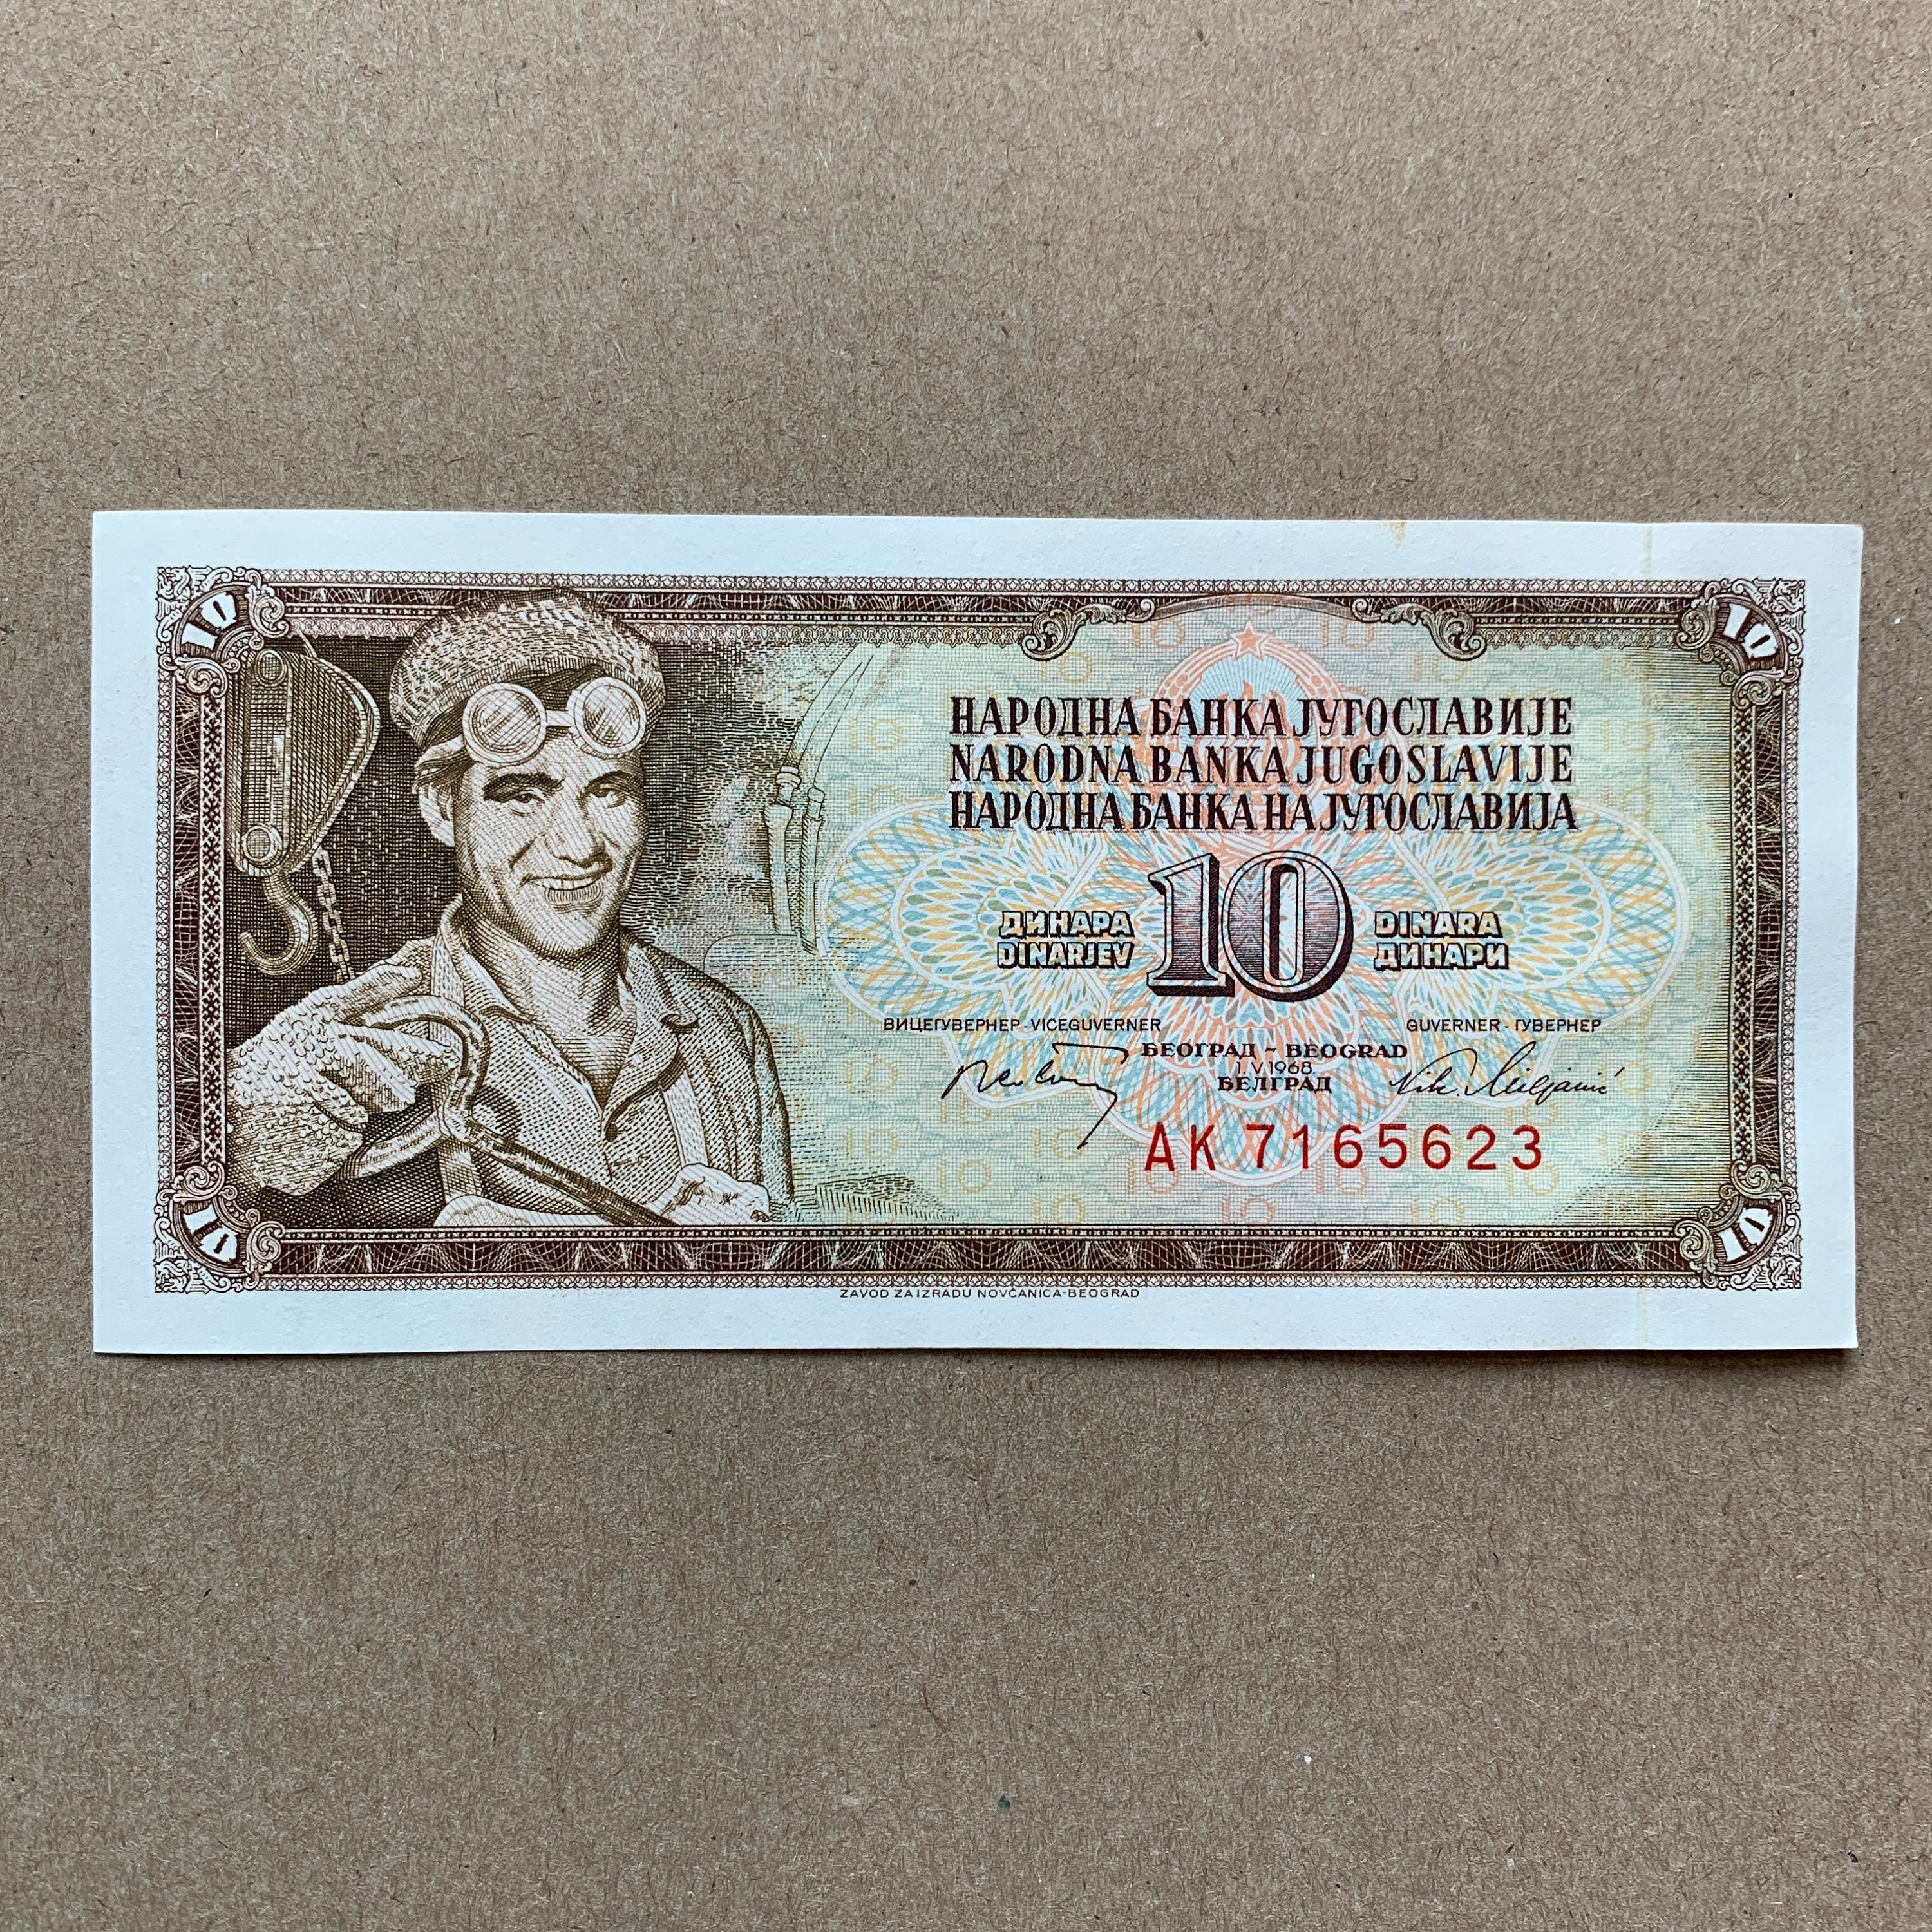 1968 Yugoslavian 10 Dinar Note. Yugoslavia Currency. Male Steelwarker at  Left. Memorabilia World Banknote Currency. Josip Broz Tito Era. -   Sweden